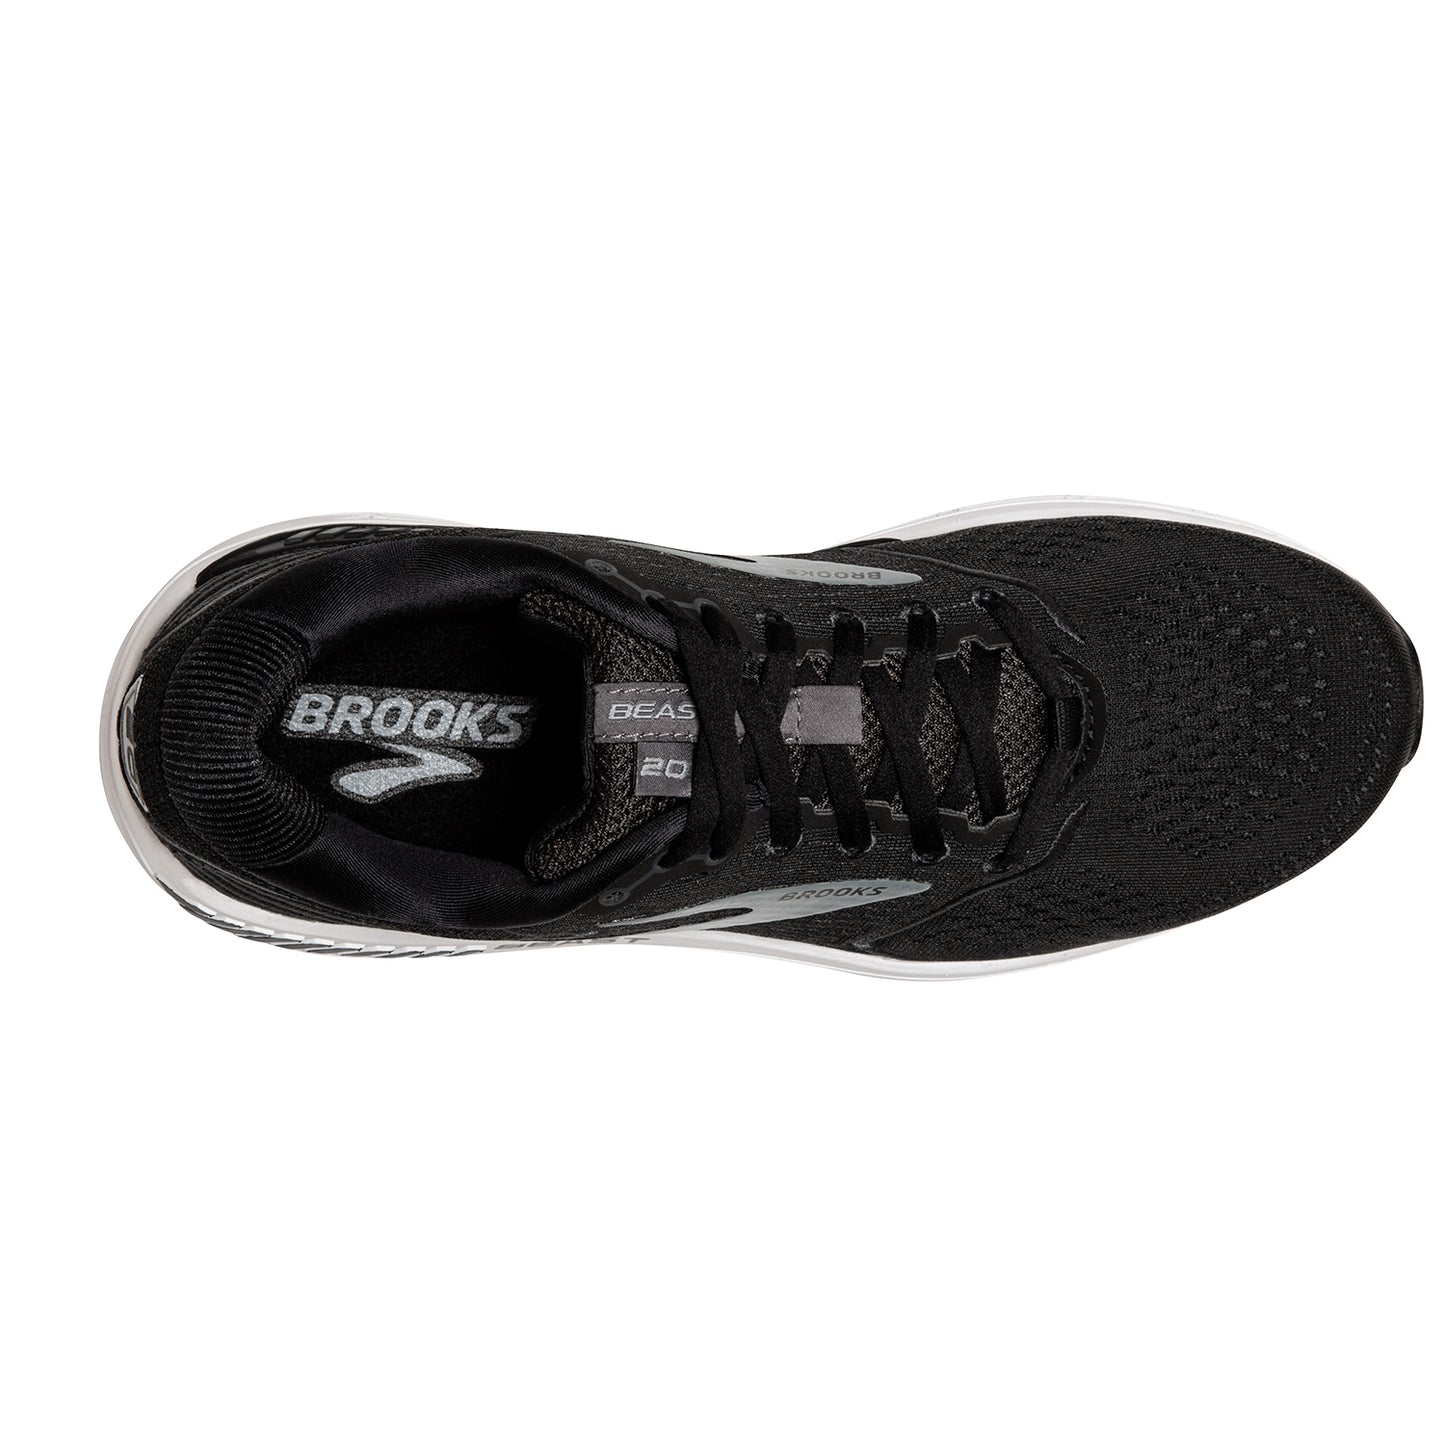 Men's Beast 20 Running Shoe - Black/Ebony/Grey - Regular (D)